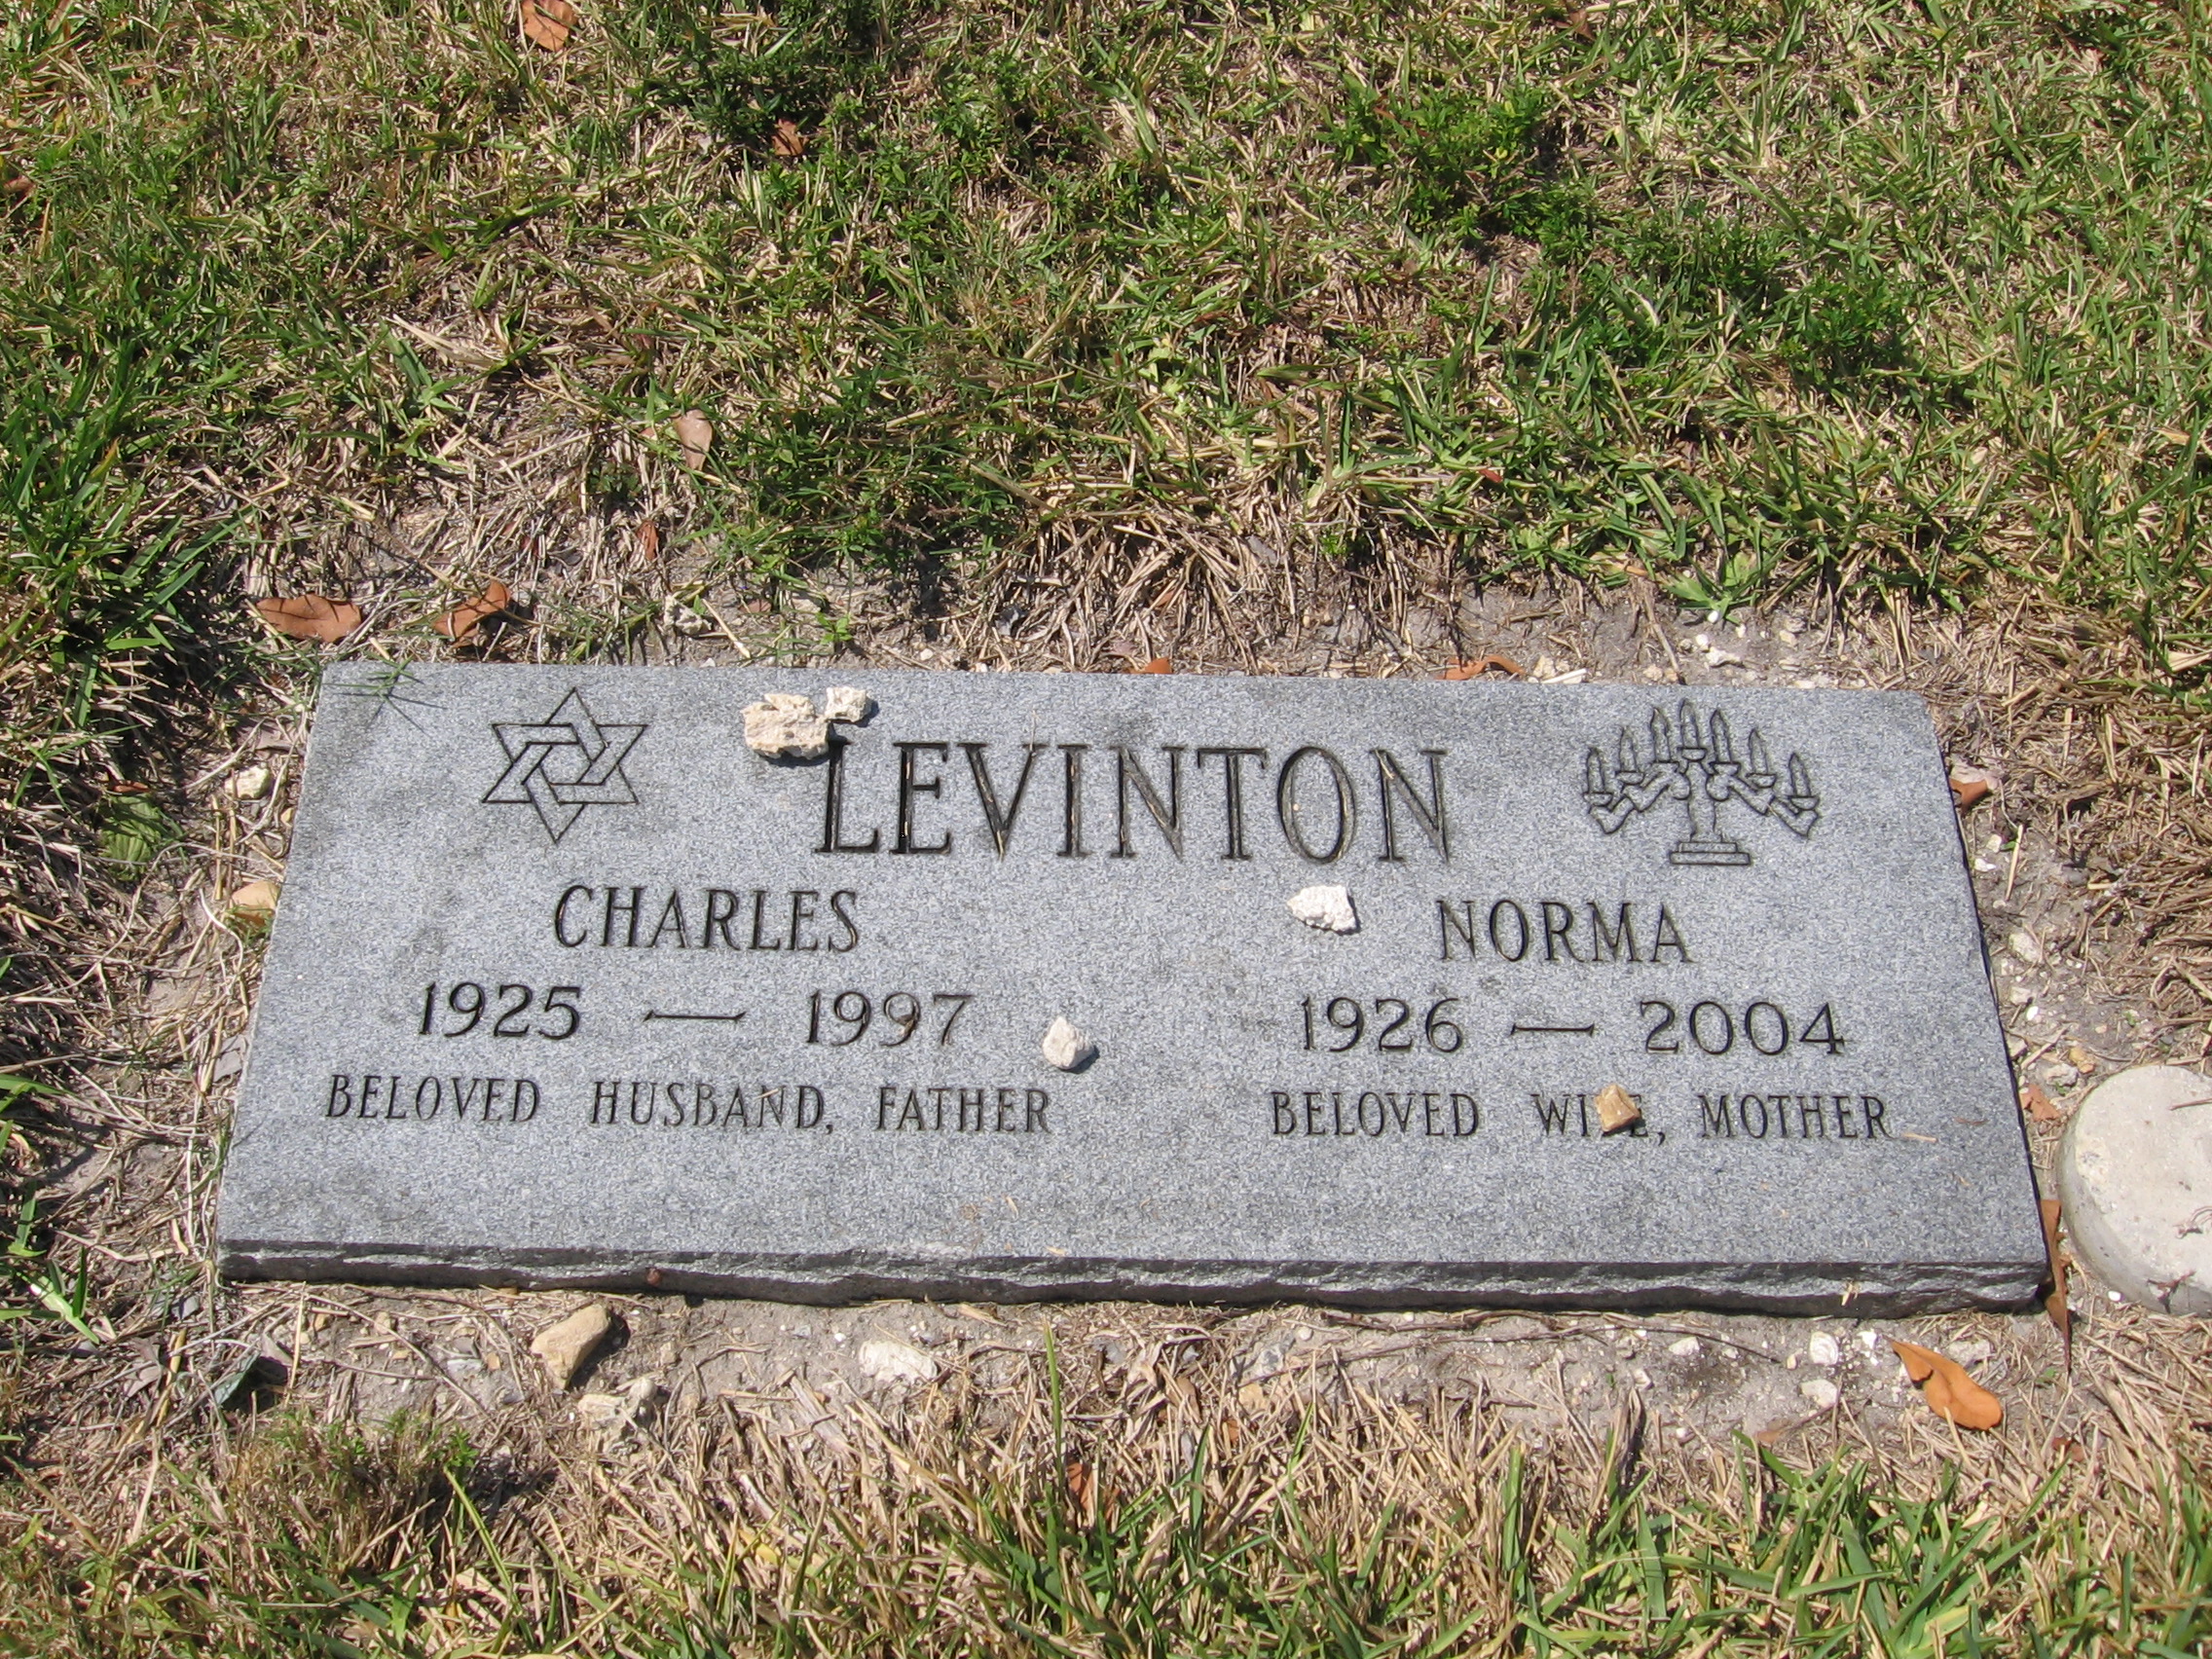 Charles Levinton